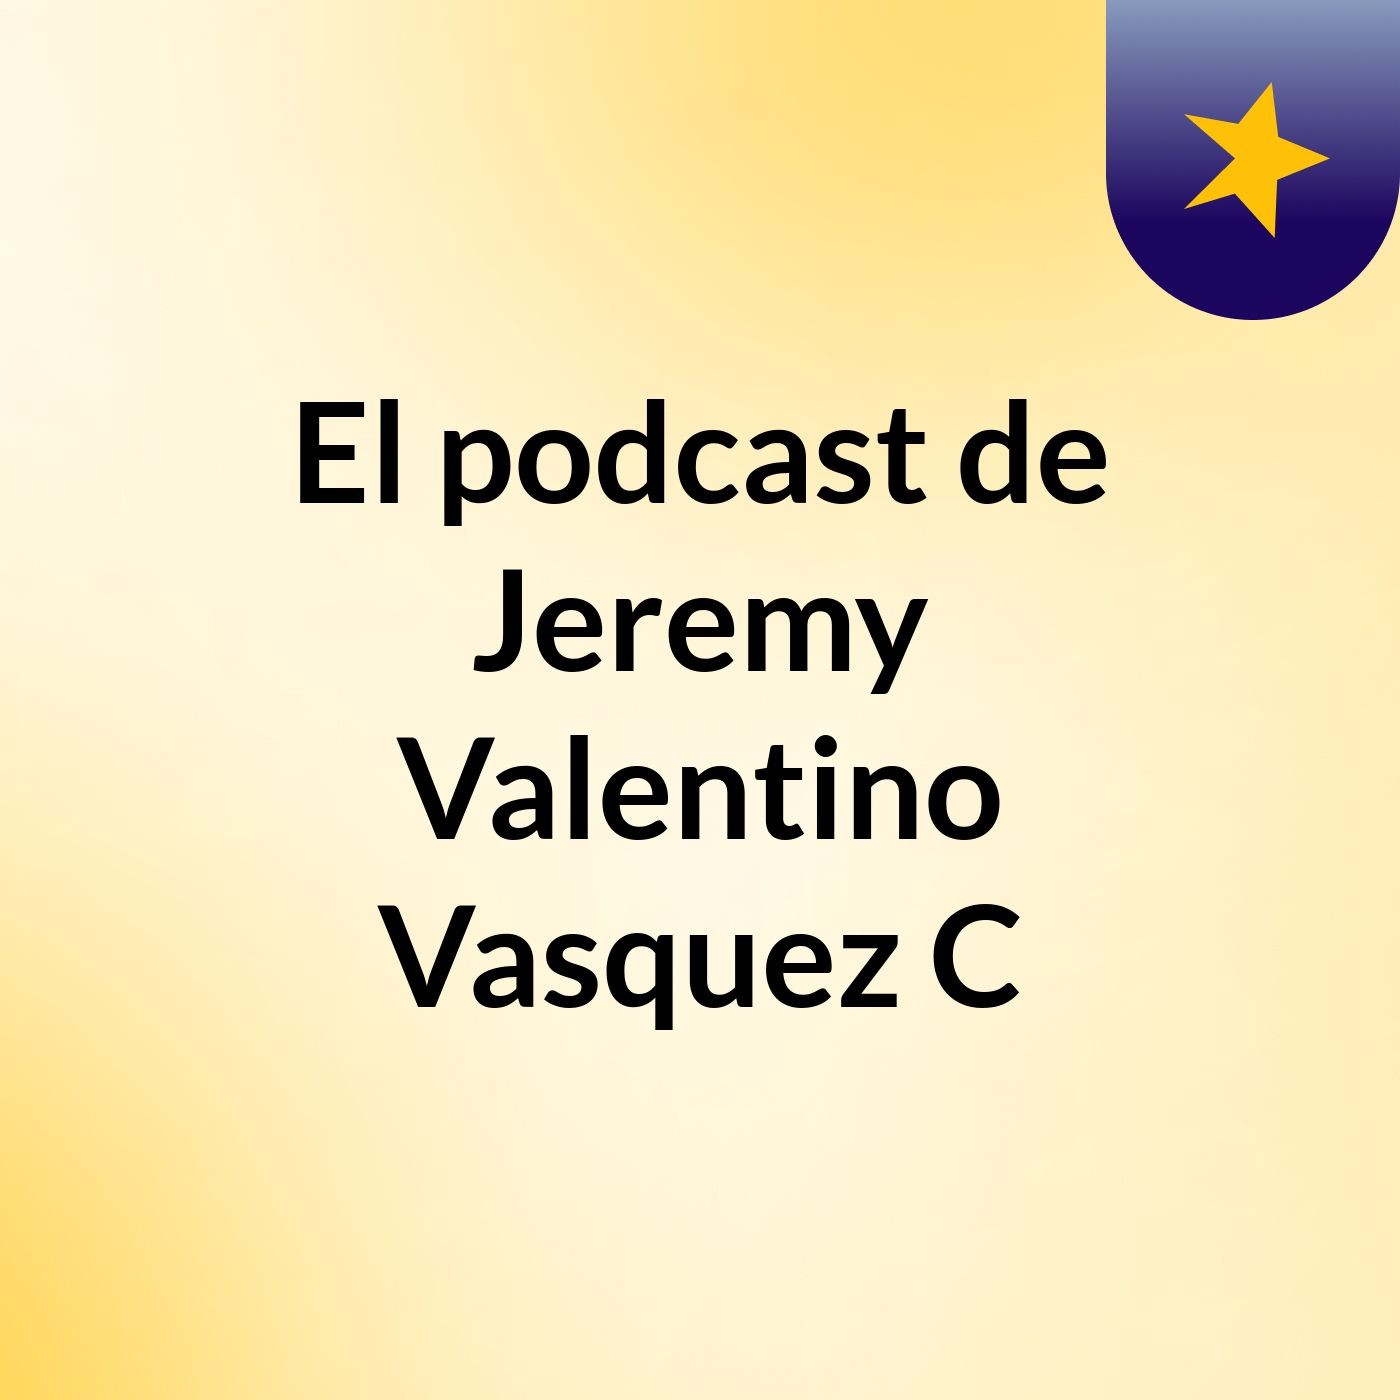 El podcast de Jeremy Valentino Vasquez C